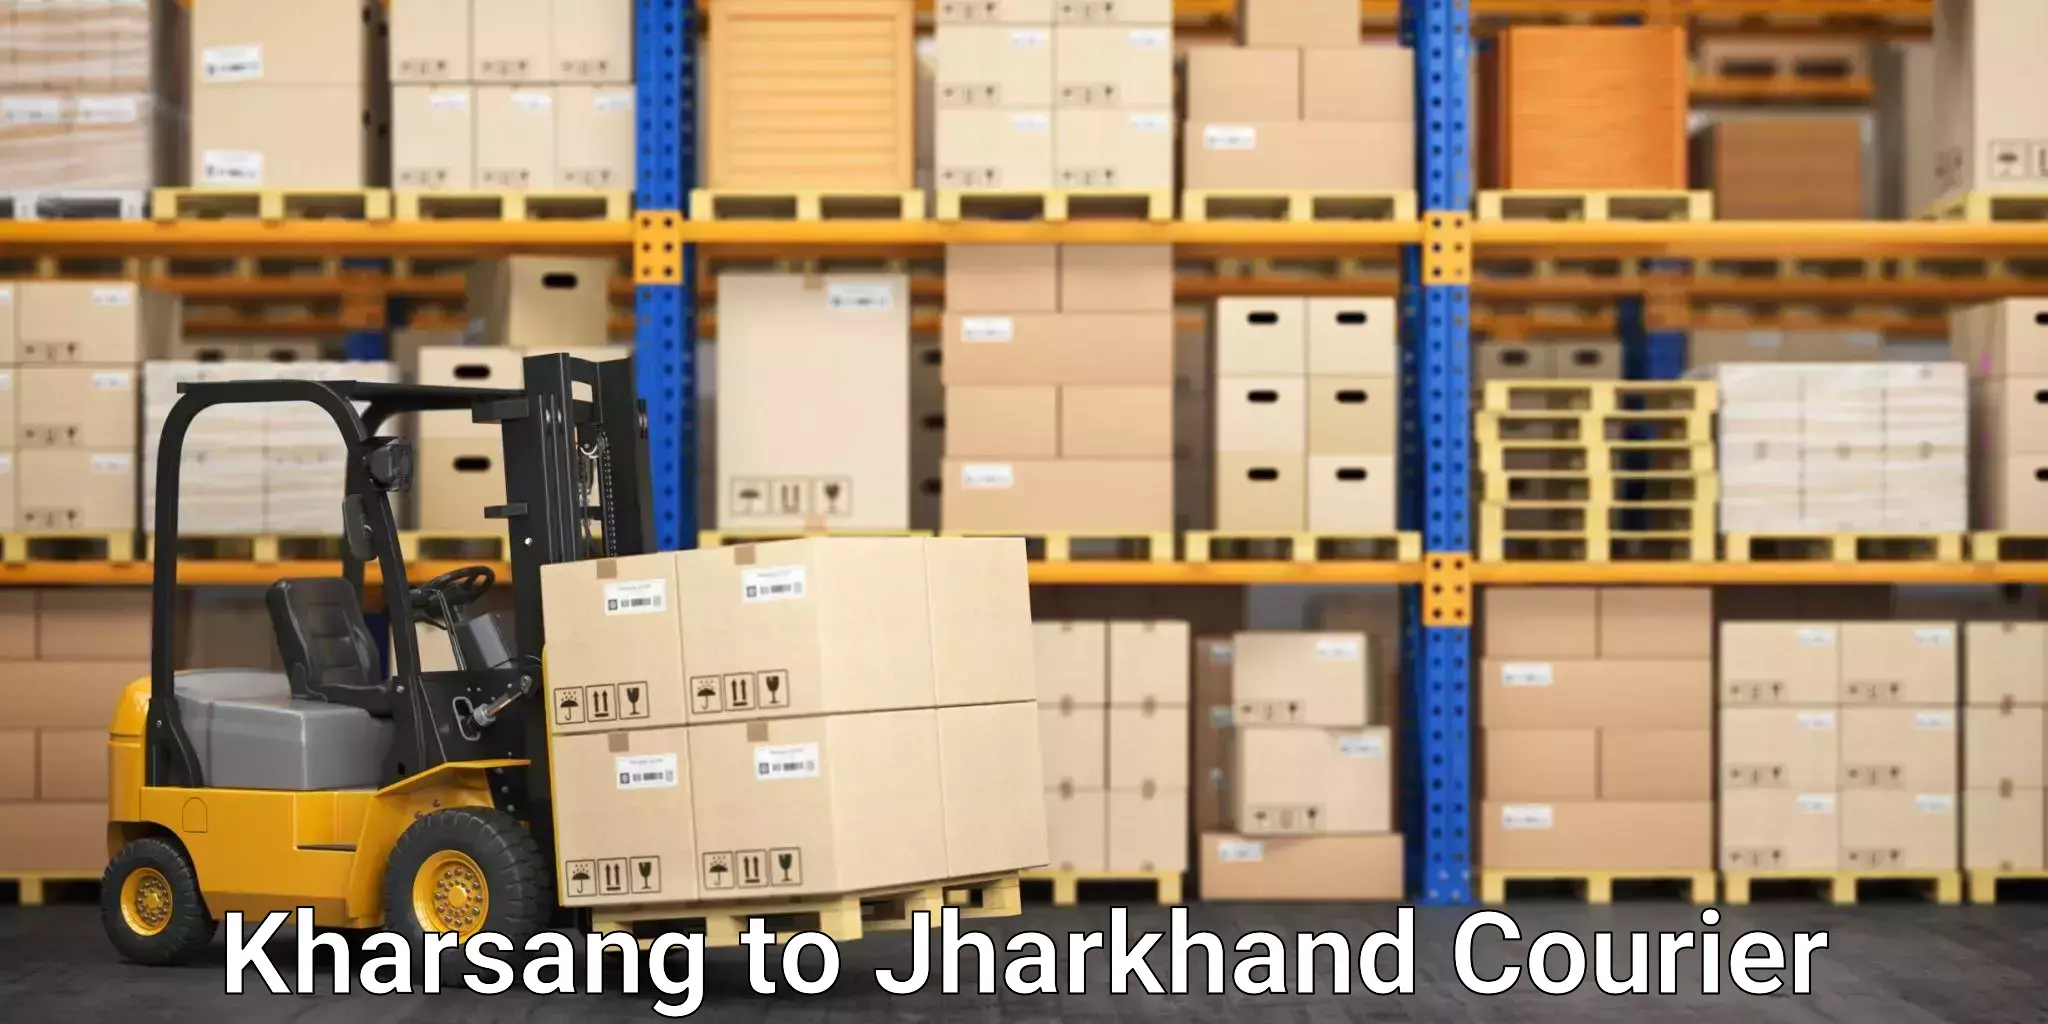 Global delivery options Kharsang to Jamshedpur